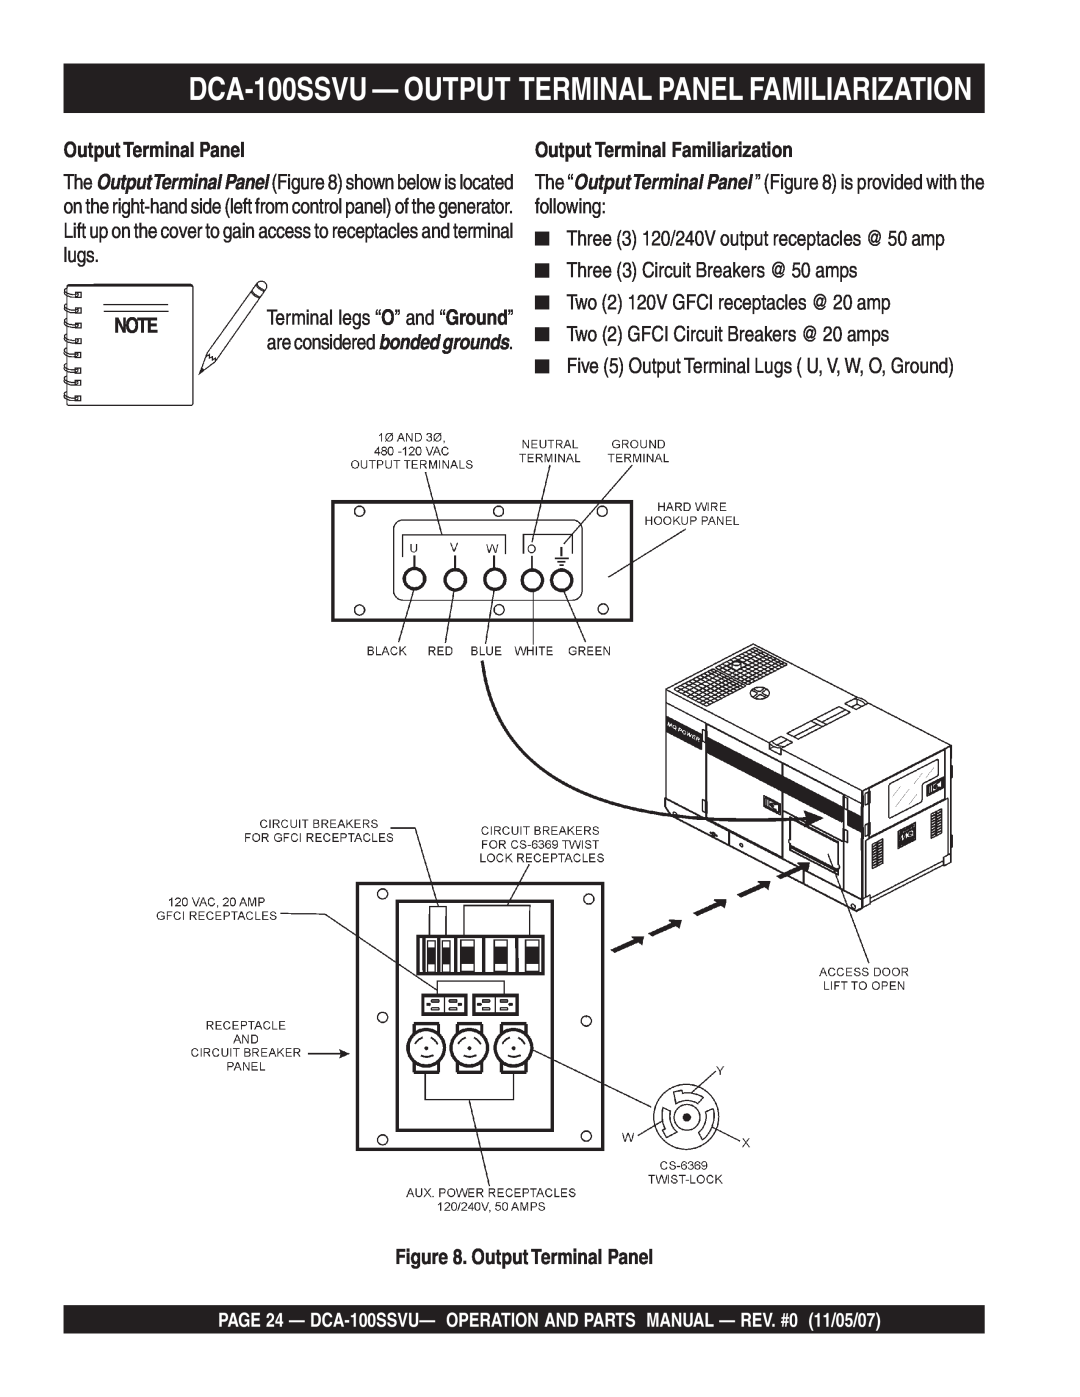 Multiquip DCA-100SSVU operation manual Output Terminal Familiarization, Output Terminal Panel 